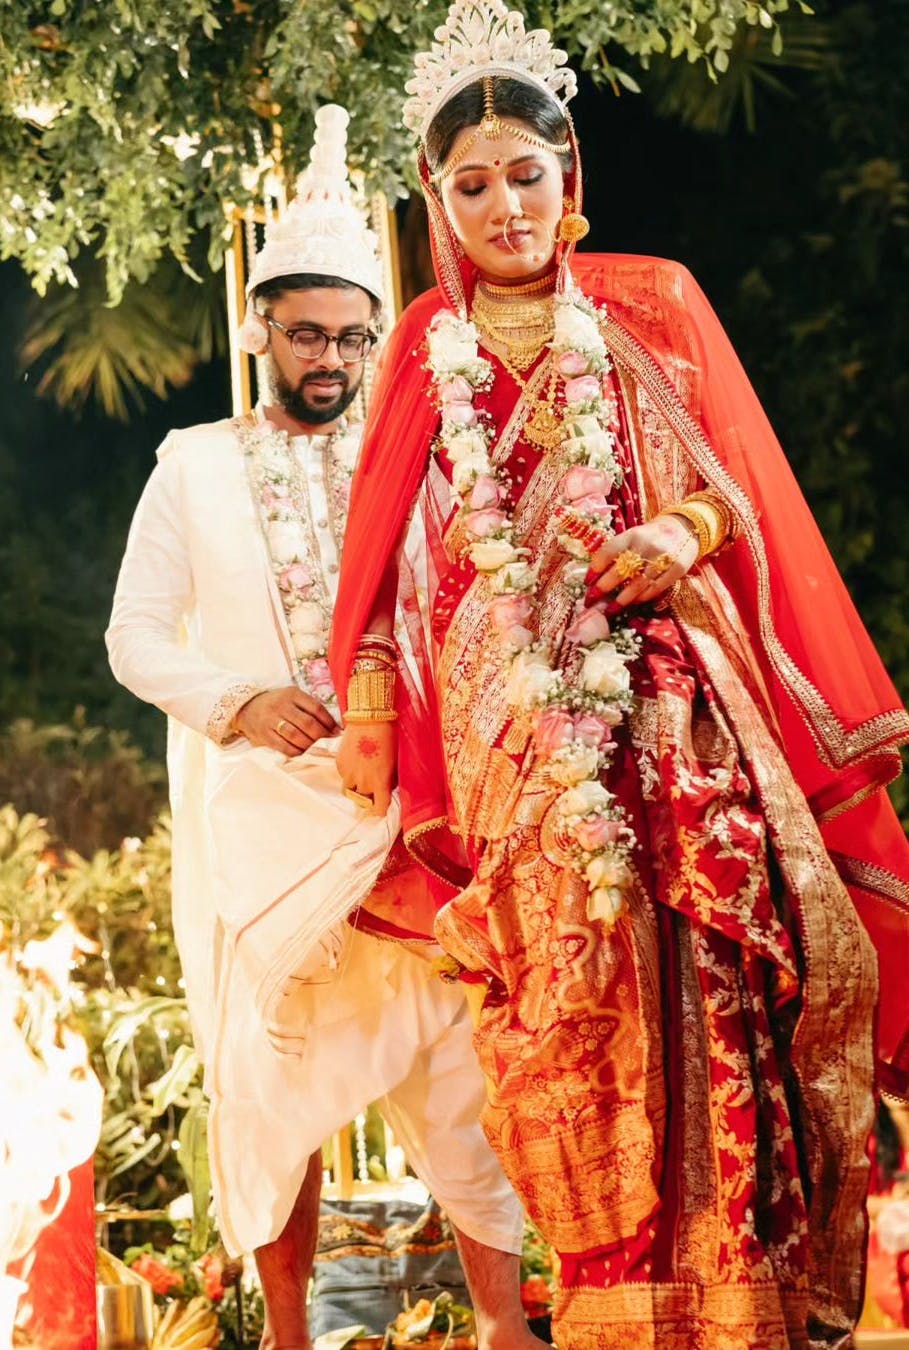 wedding photo bengali


